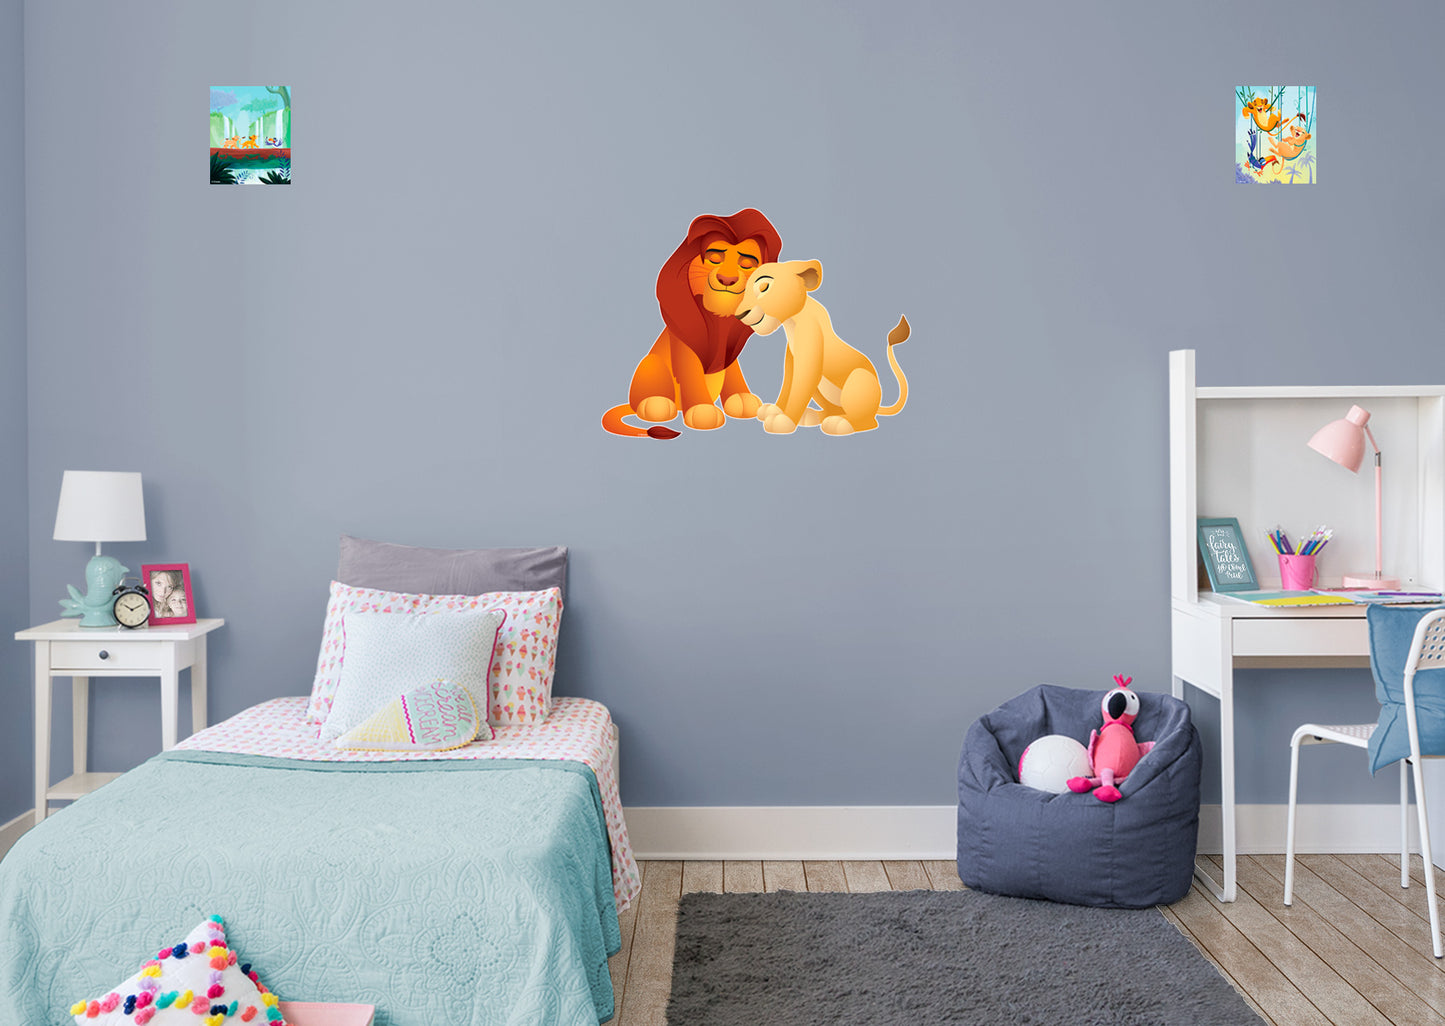 Vinyl Wall Decal Sticker Decor Nursery Lion King Simba DIsney